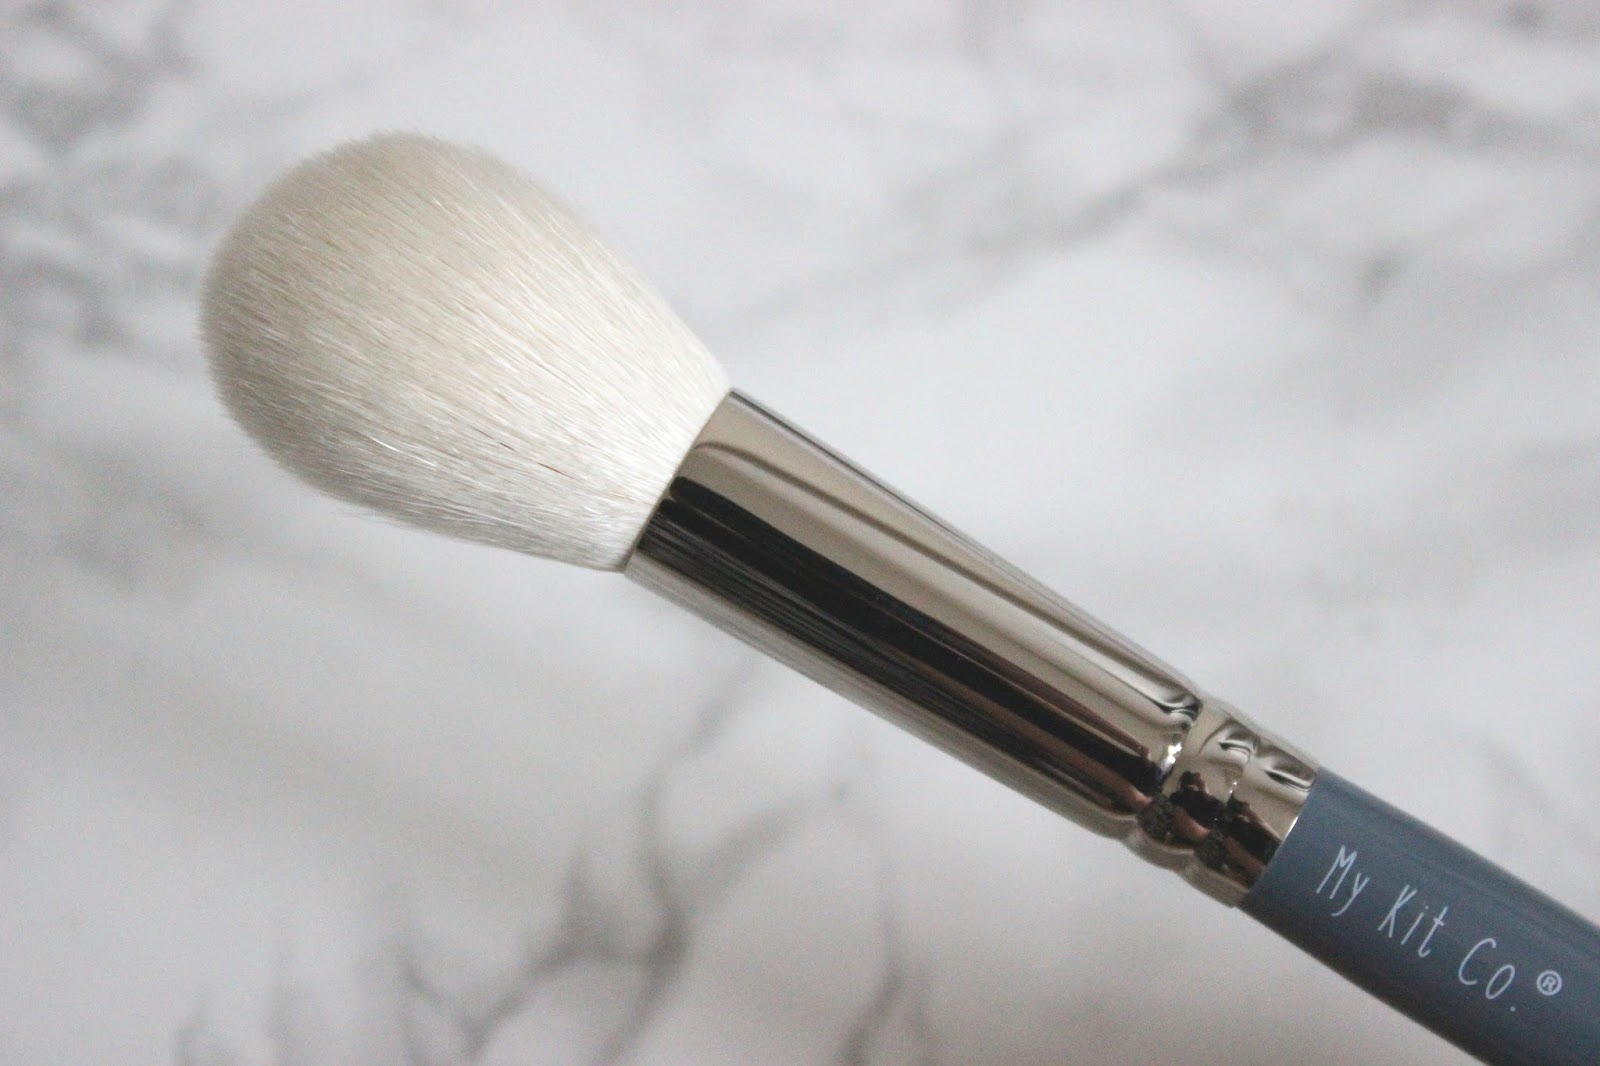 My Kit Co. Make Up Brushes - My Blush & Powder